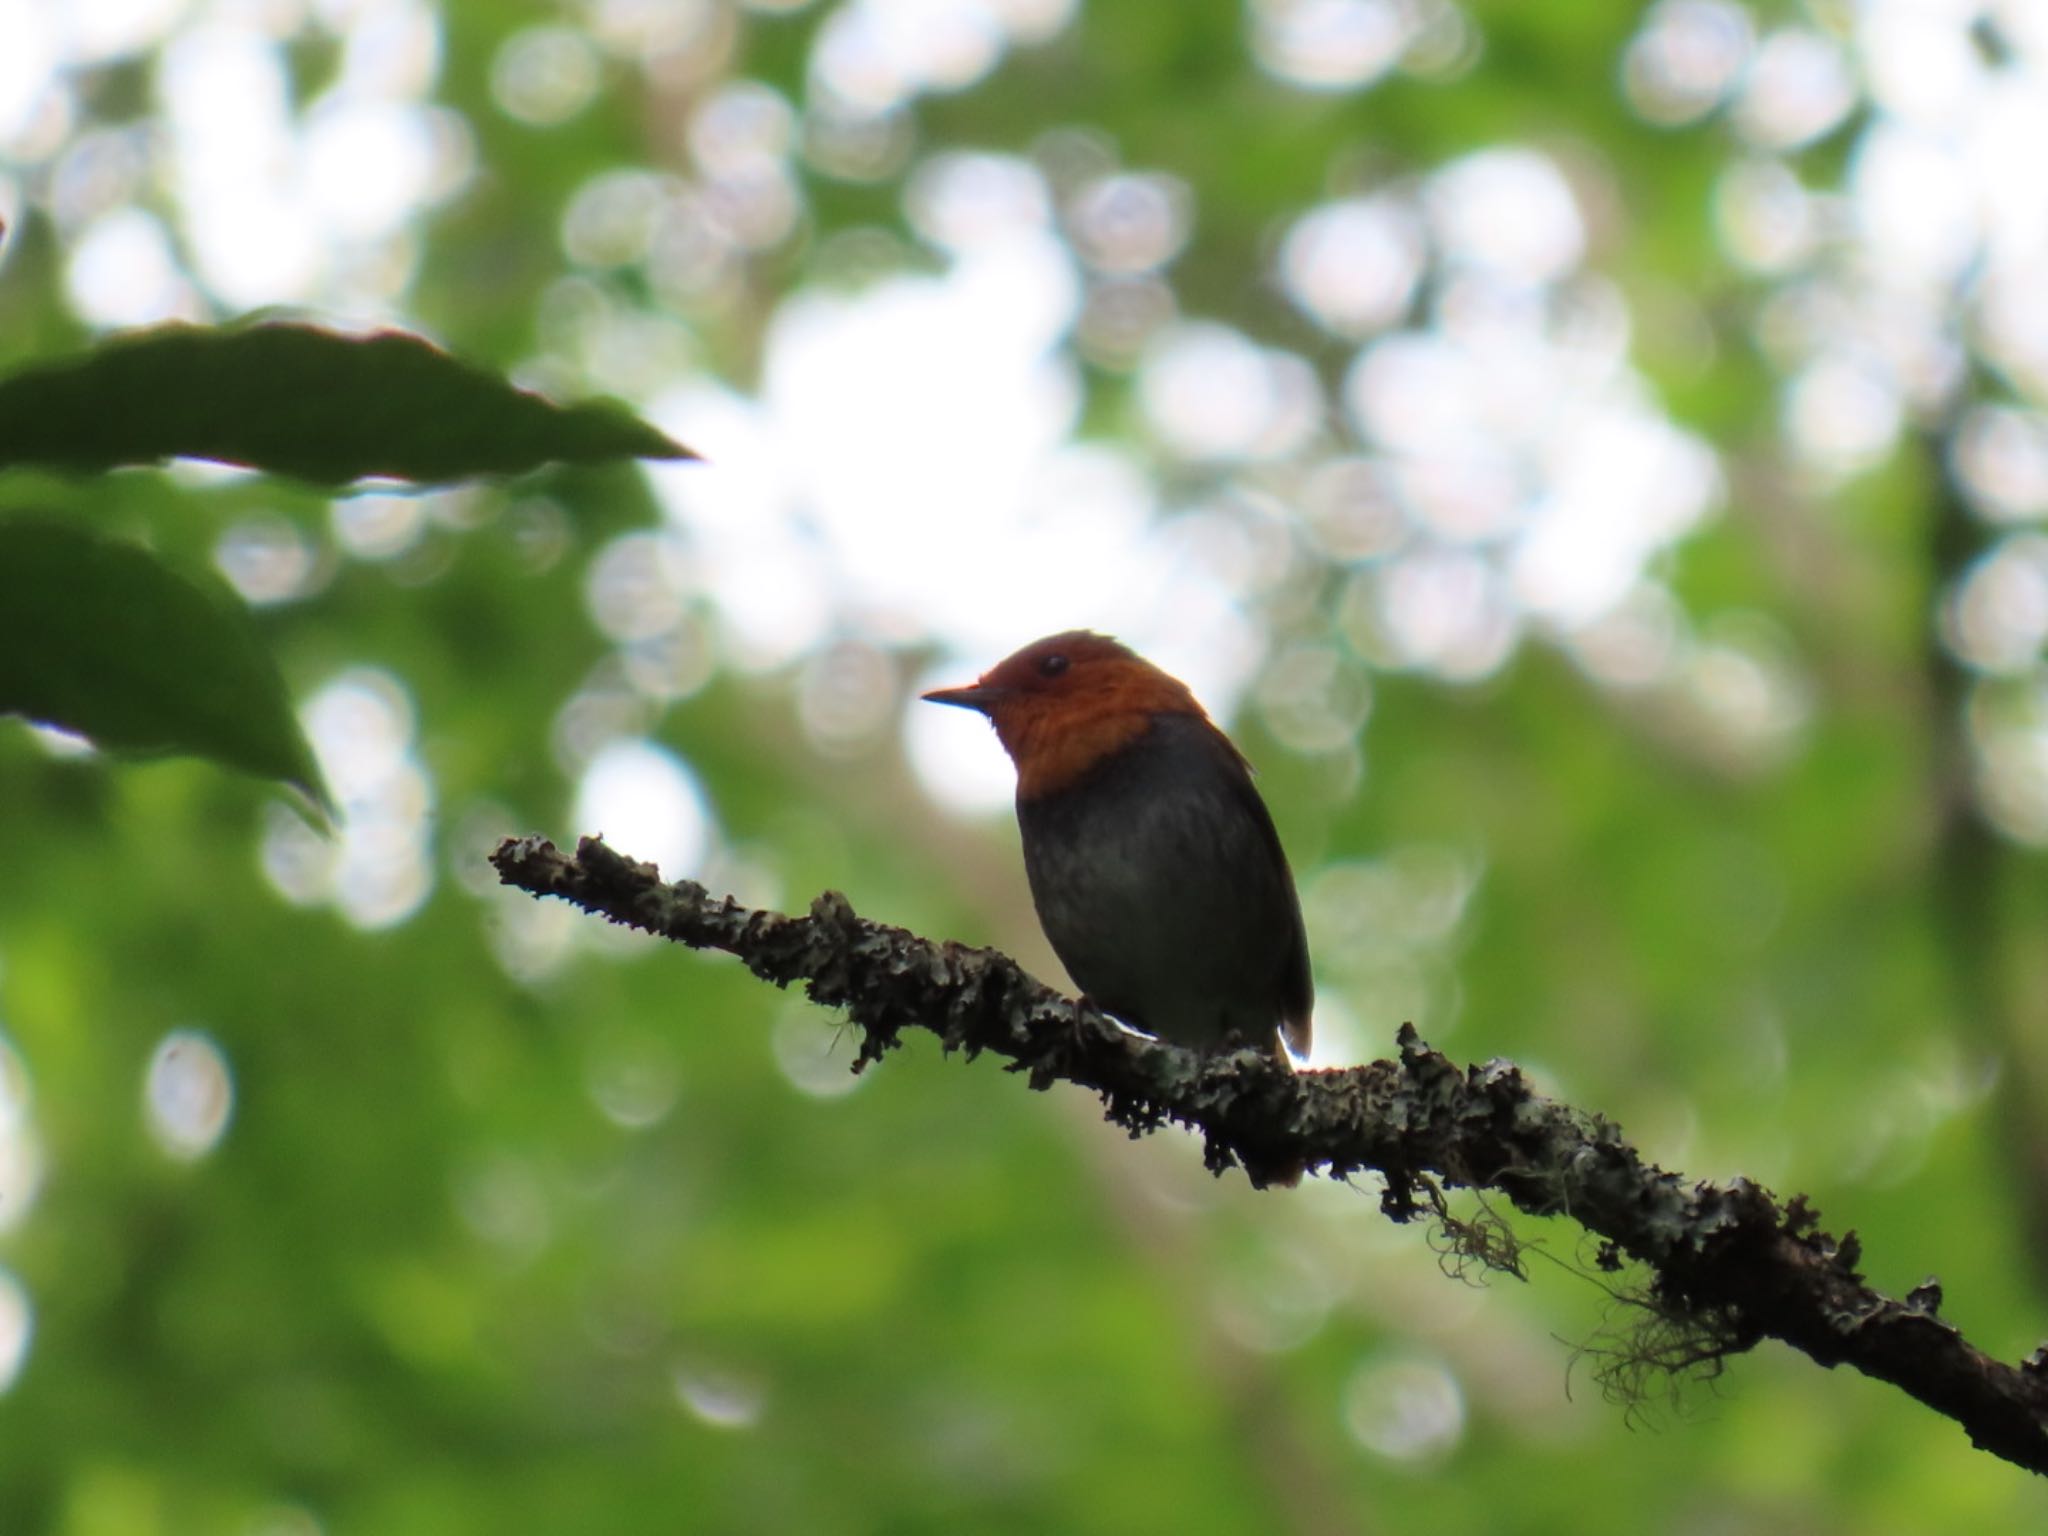 Photo of Japanese Robin at 御泉水の森 by 鳥撮り行くよ